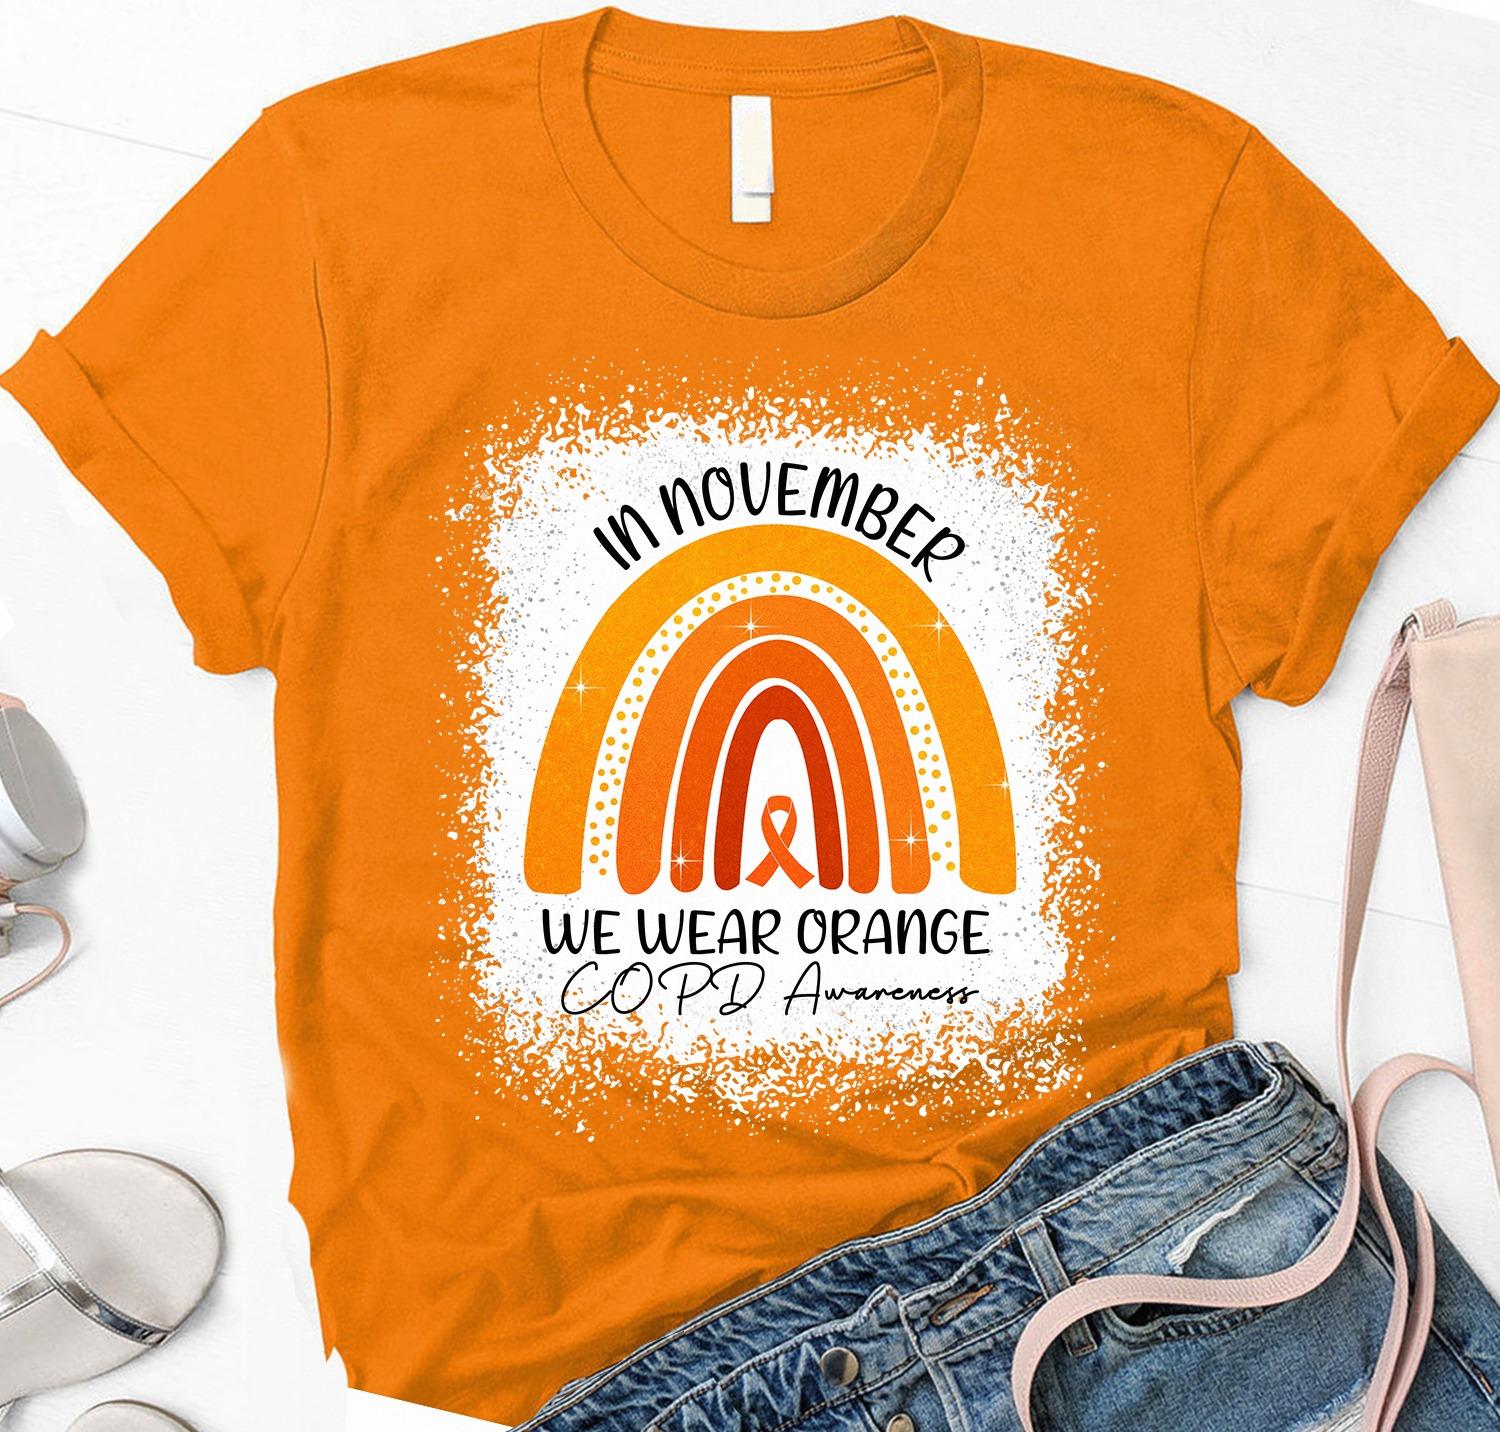 In November we wear orange - COPD awareness, gift for COPD warrior